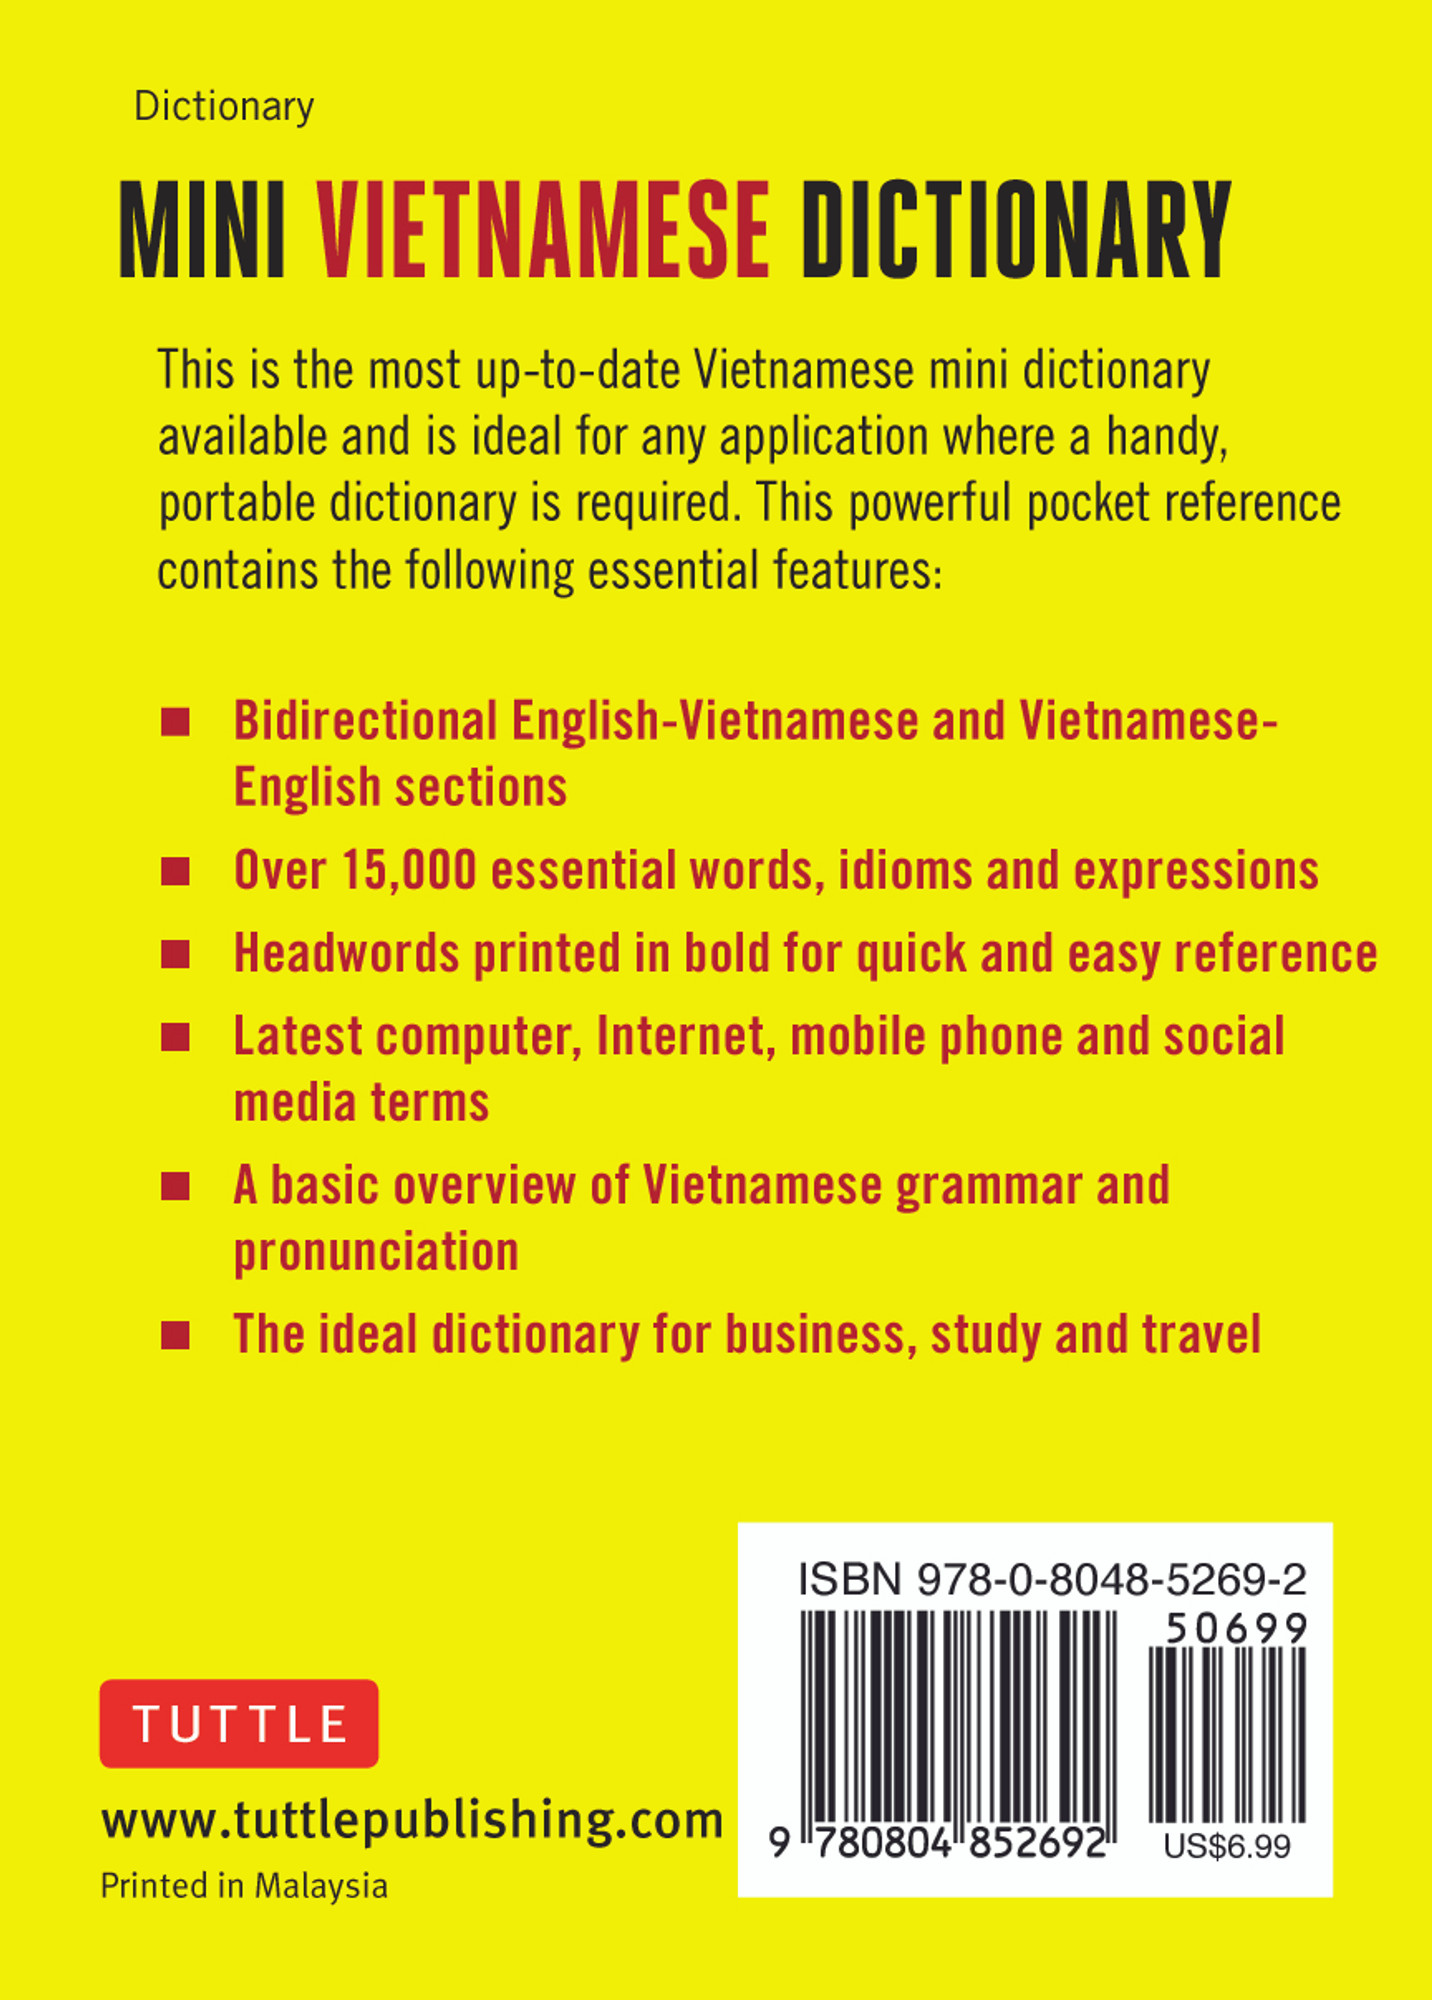 presentation in vietnamese dictionary